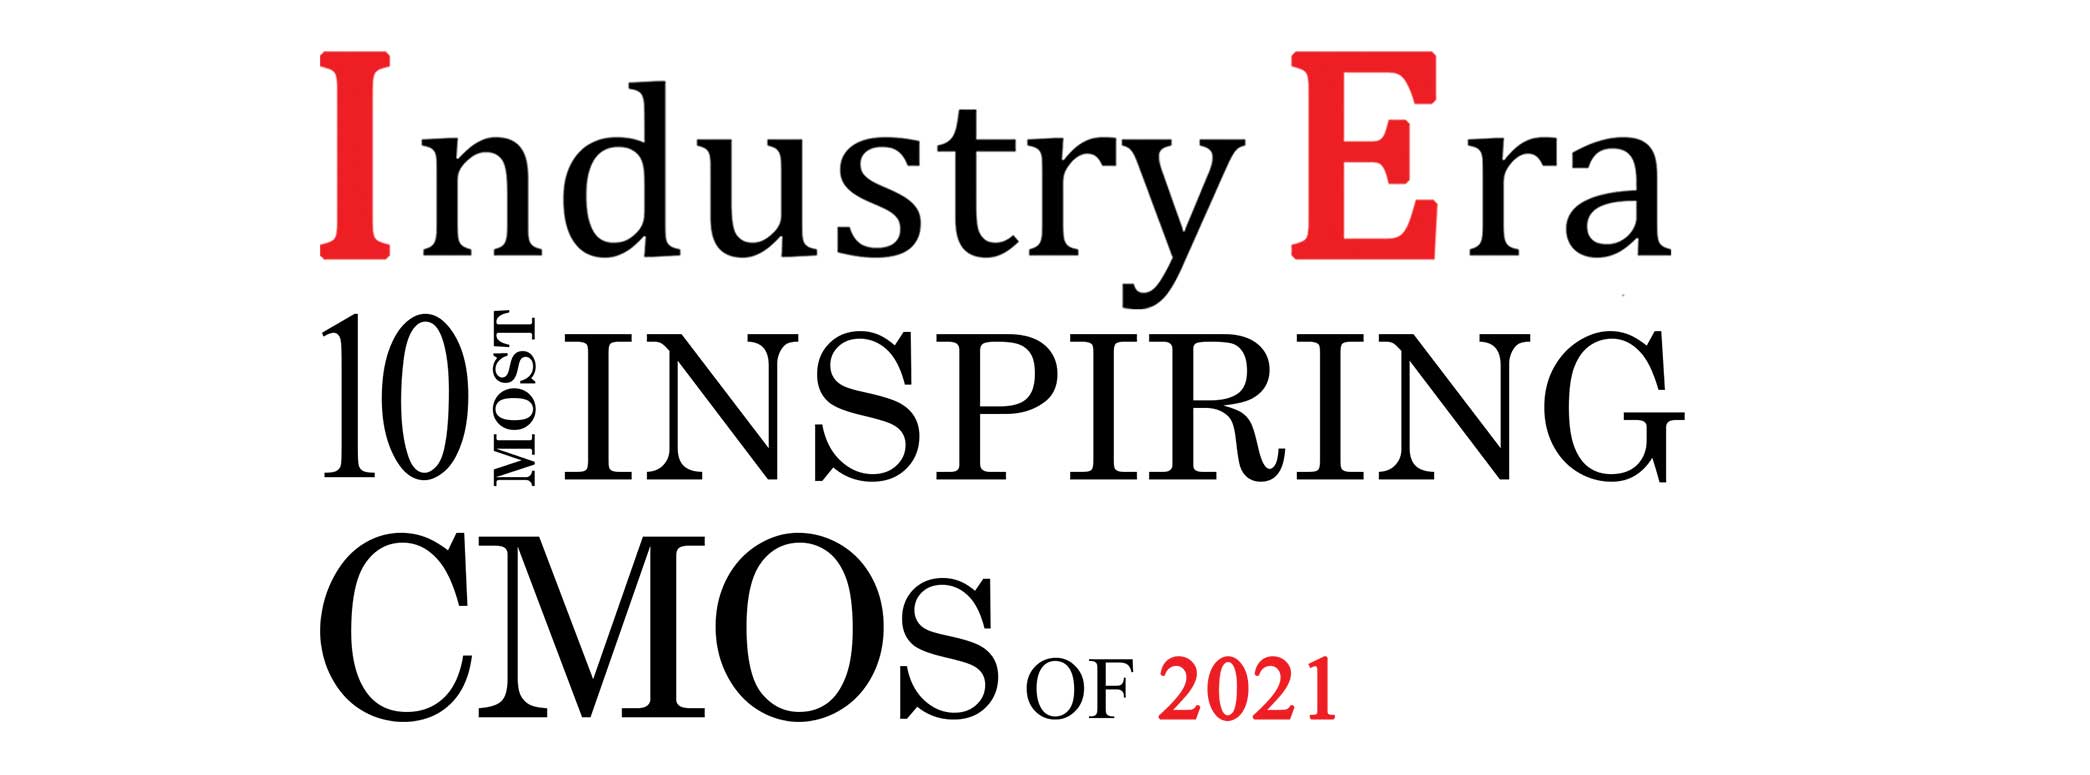 10 Most Inspiring CMOs of 2020 Logo